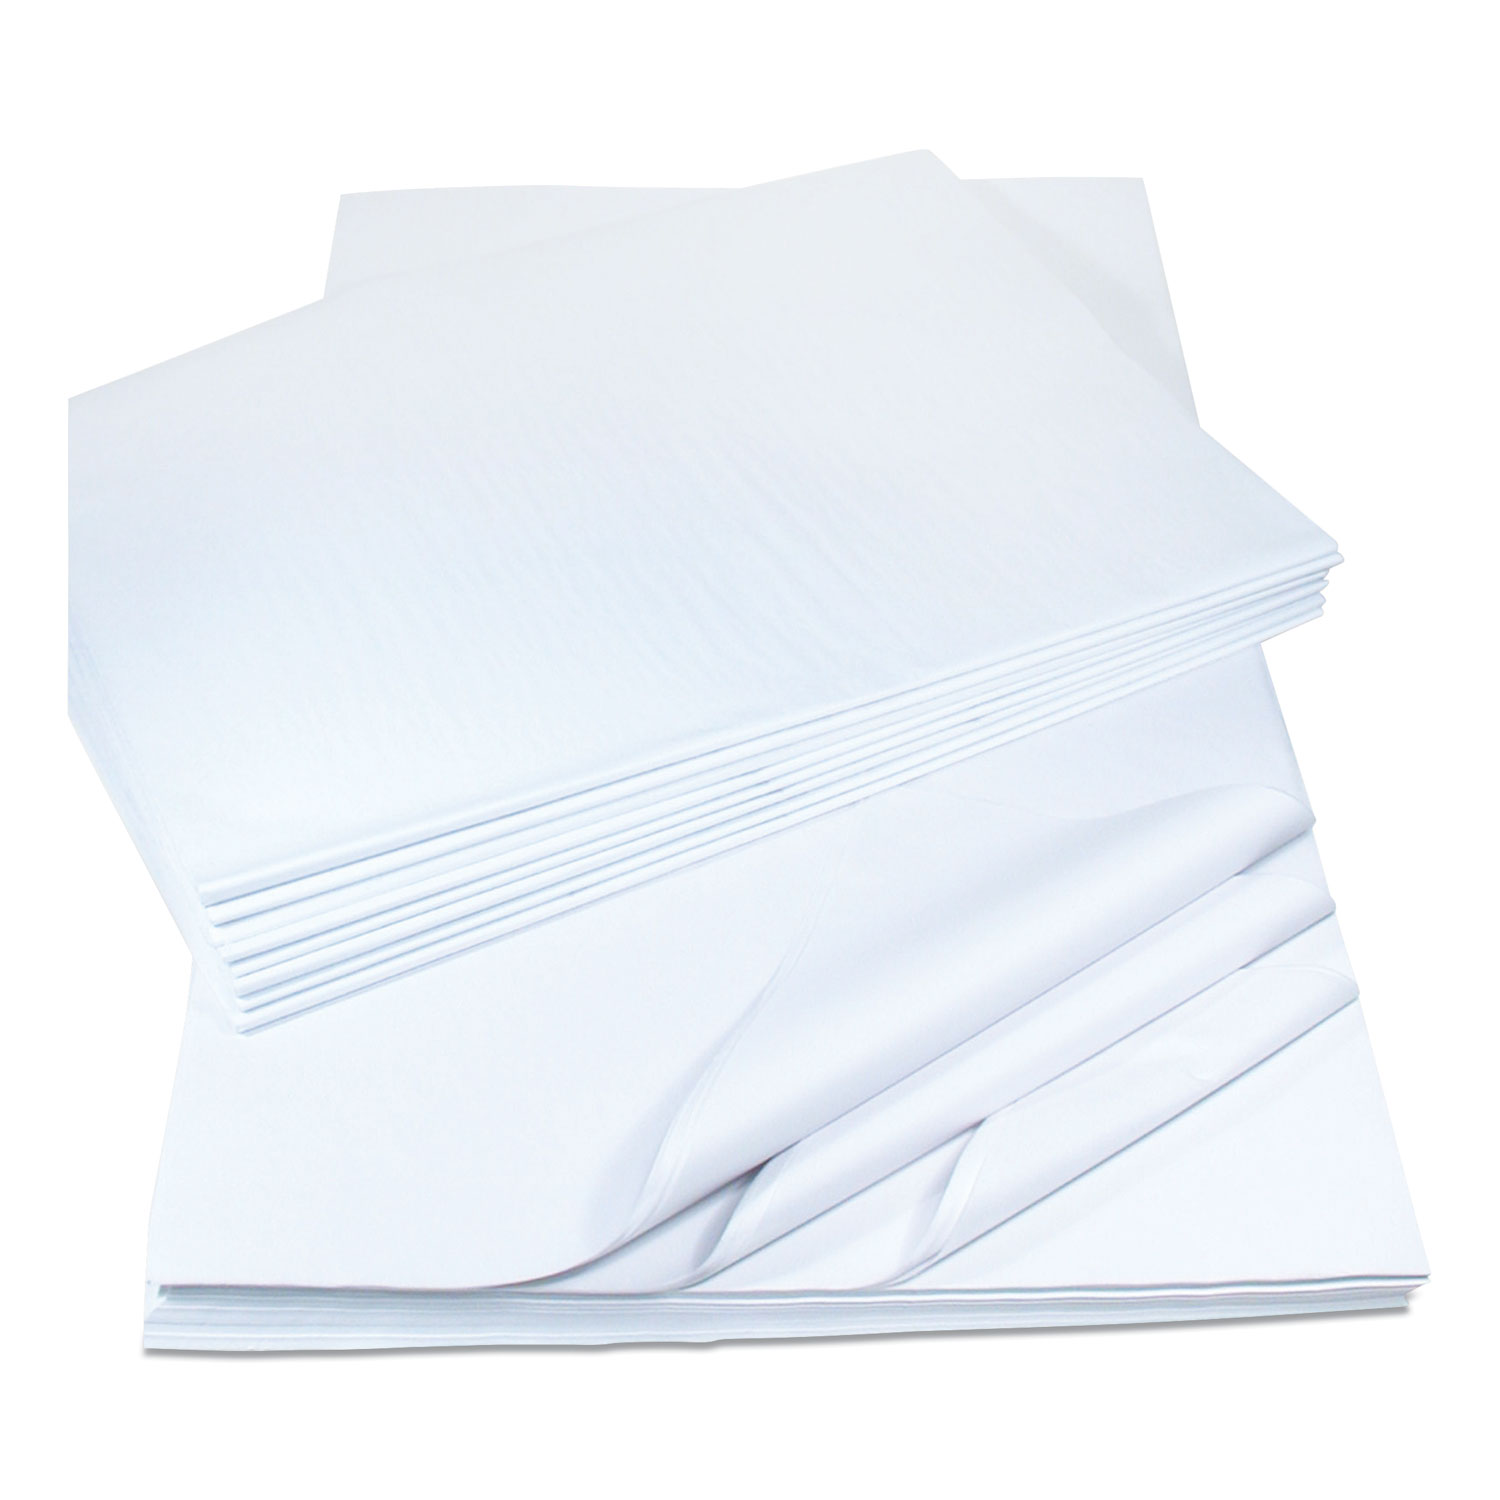 Seaman Paper Tissue Paper, 20 x 27, White, 480 Sheets/Pack, 5 Packs/Ream